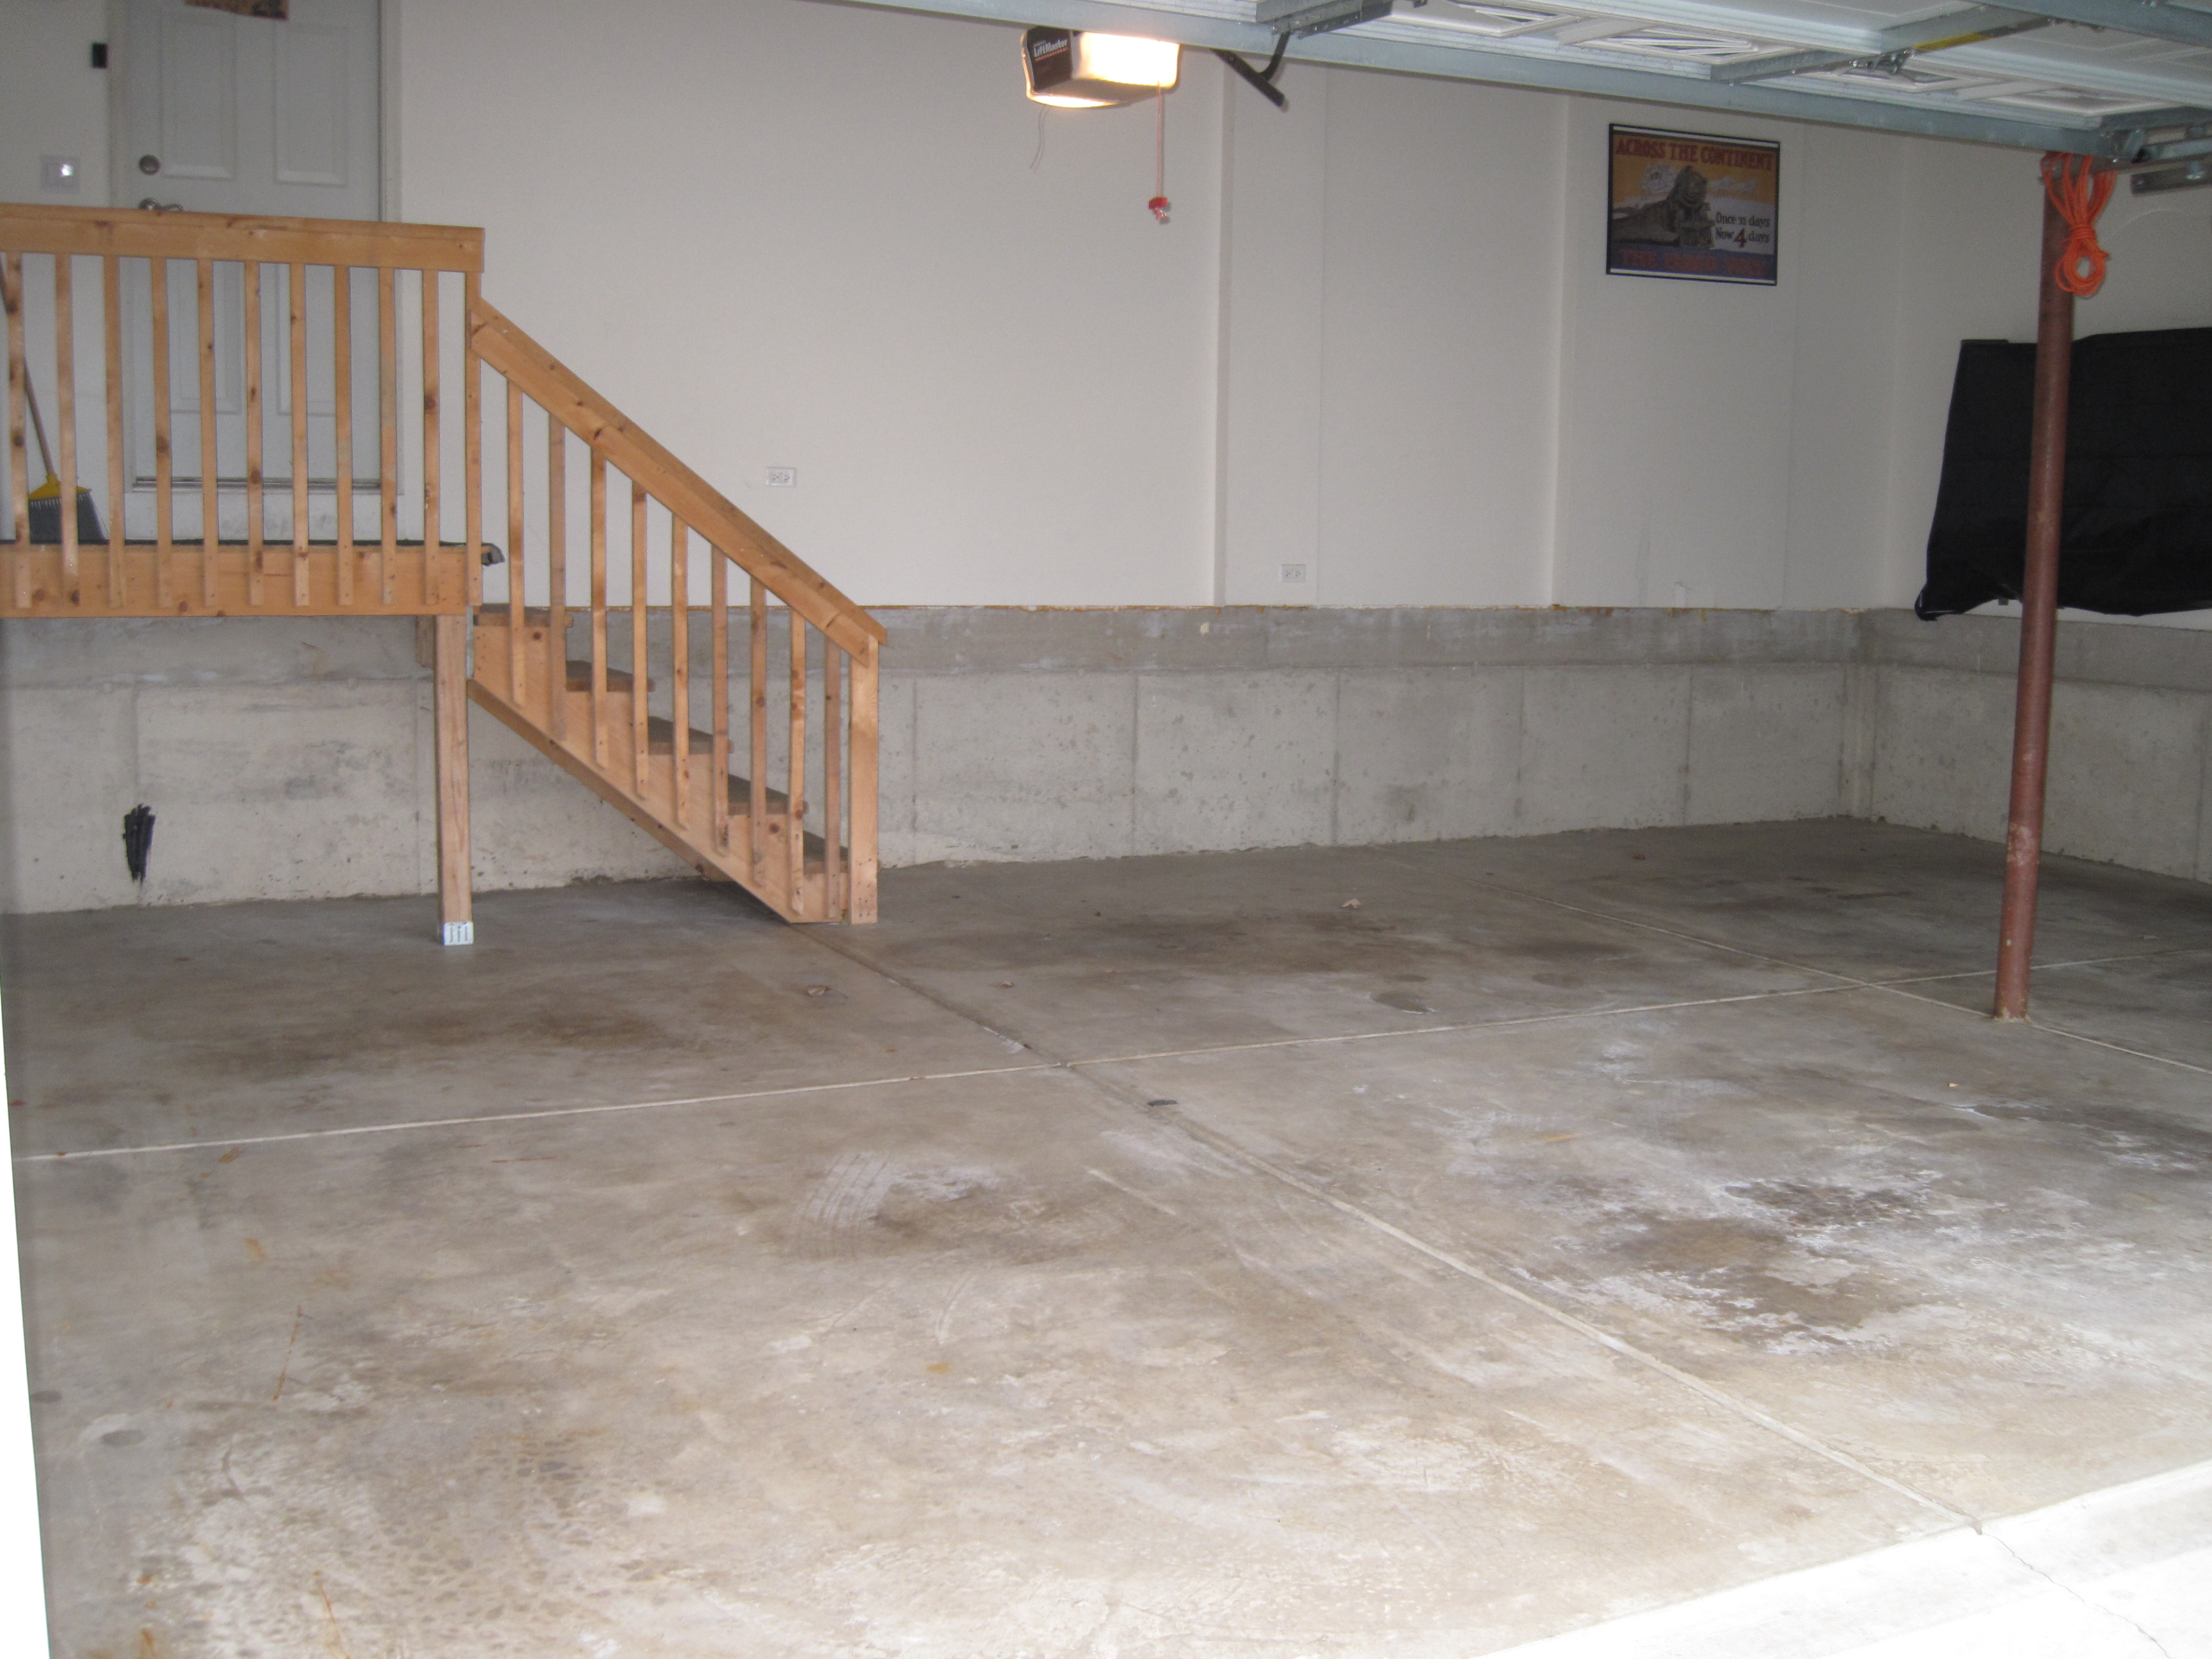 Finished Garage Floor Faxer09 S Blog